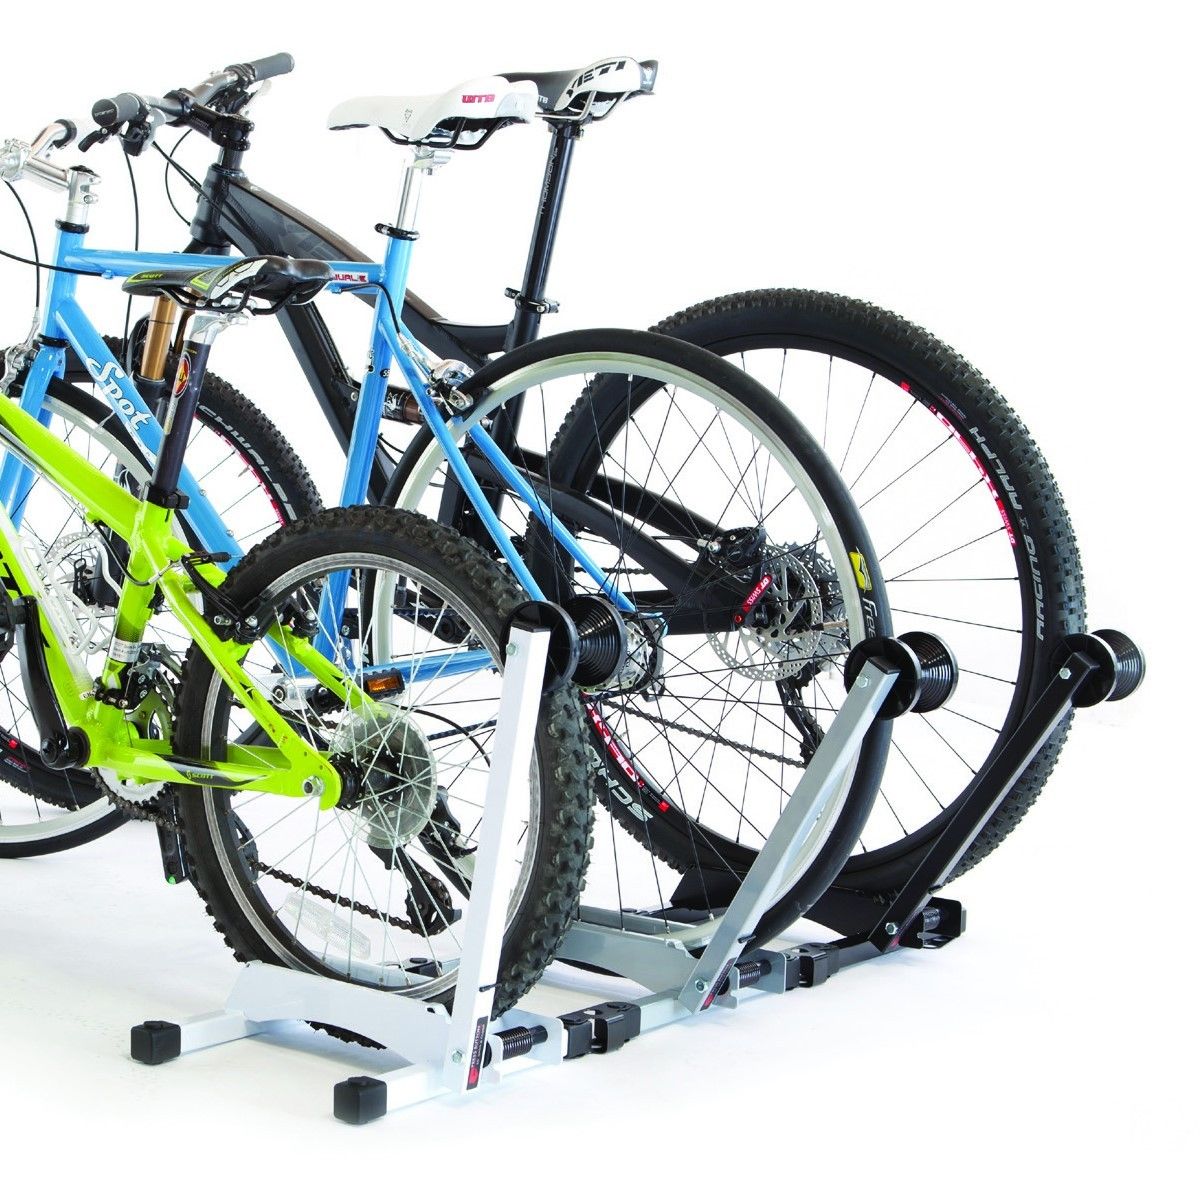 New Feedback Sports RAKK Floor Bicycle Display Storage Stand